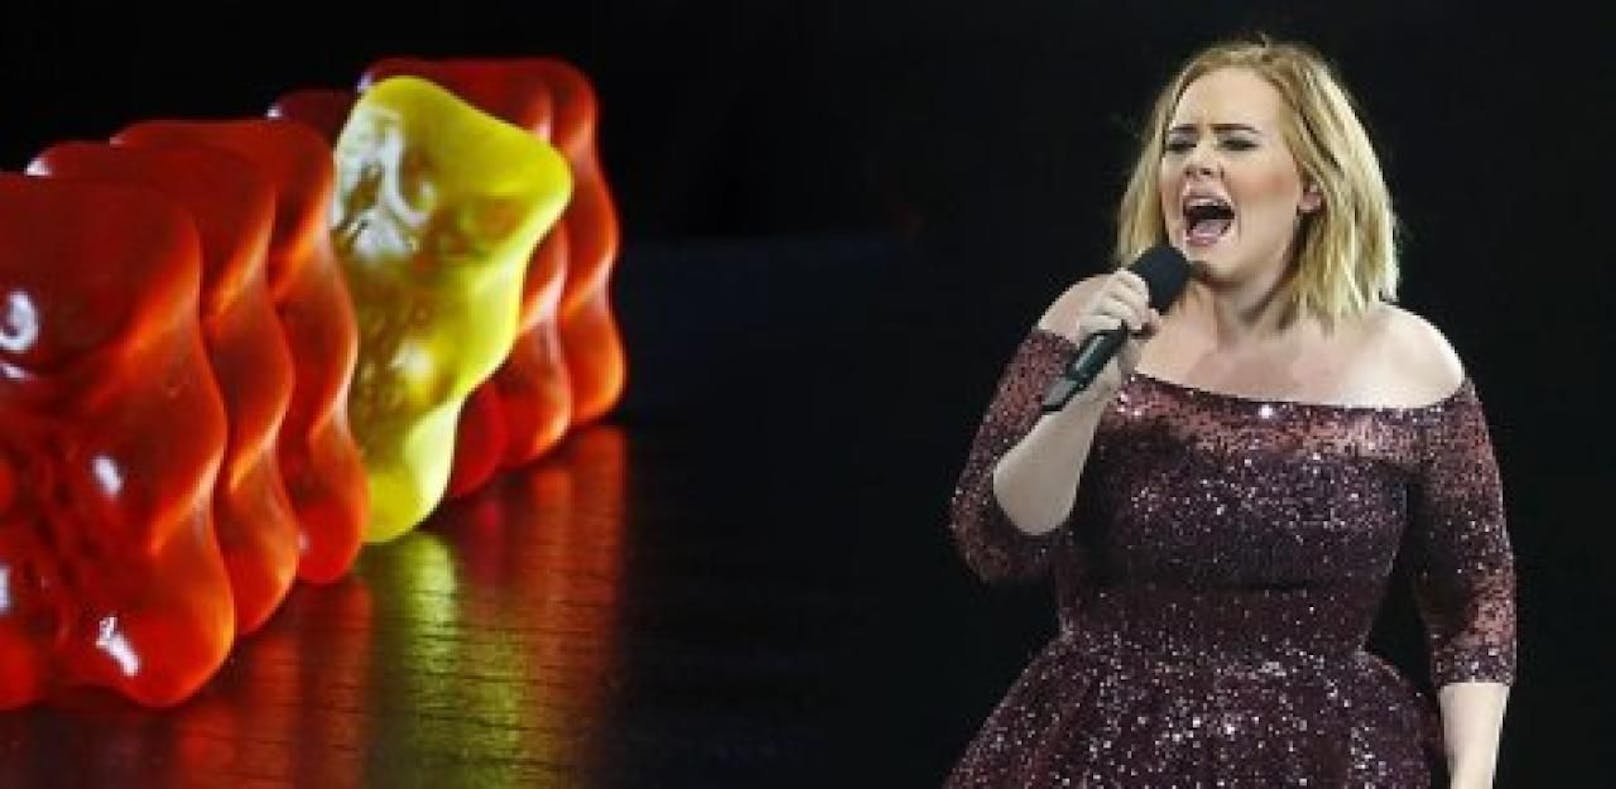 Gummibärchen gehen viral wegen Adele